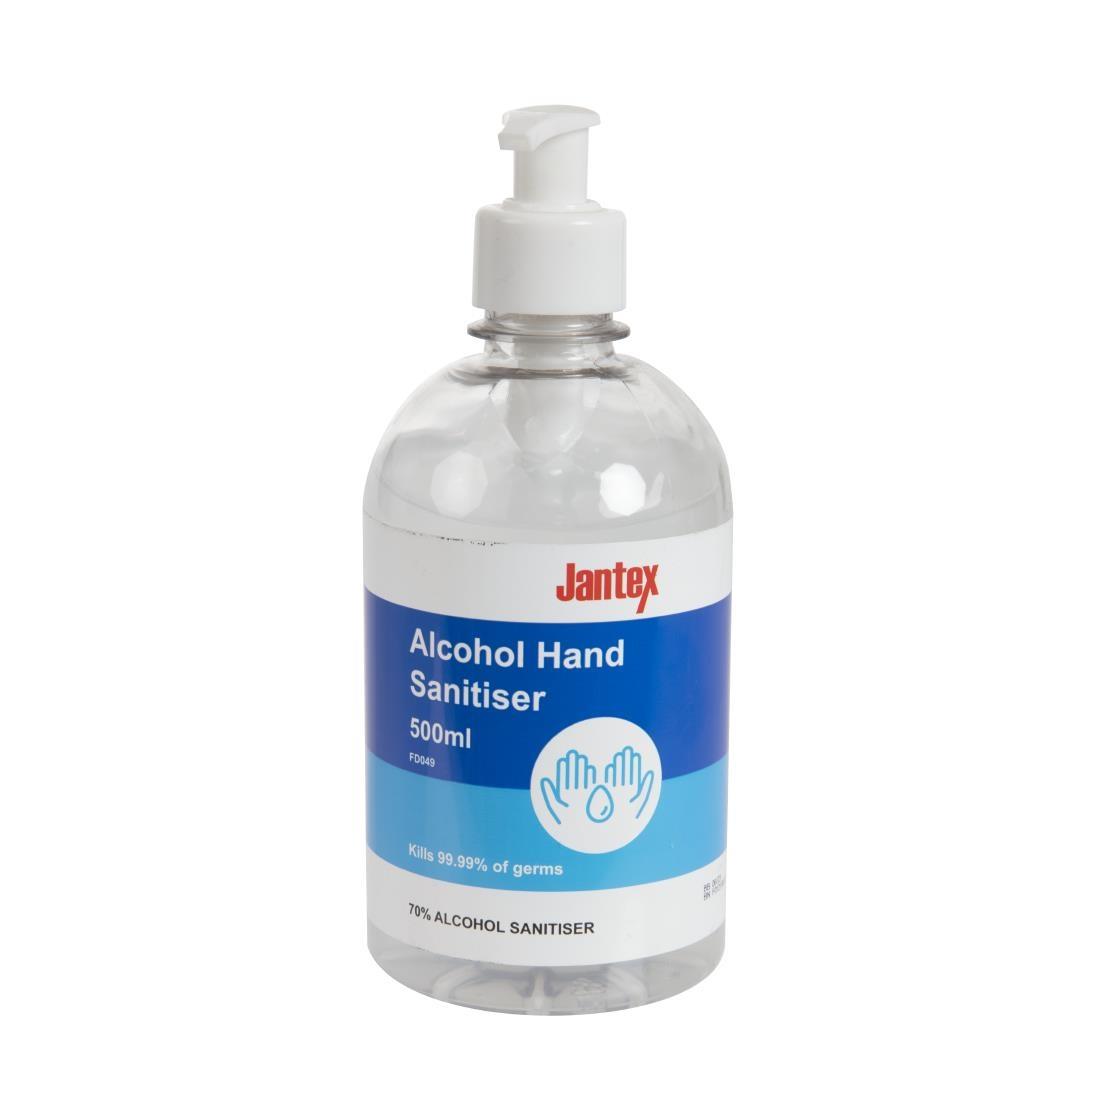 Jantex 70% Alcohol Hand Sanitiser 500ml - FD049  - 1